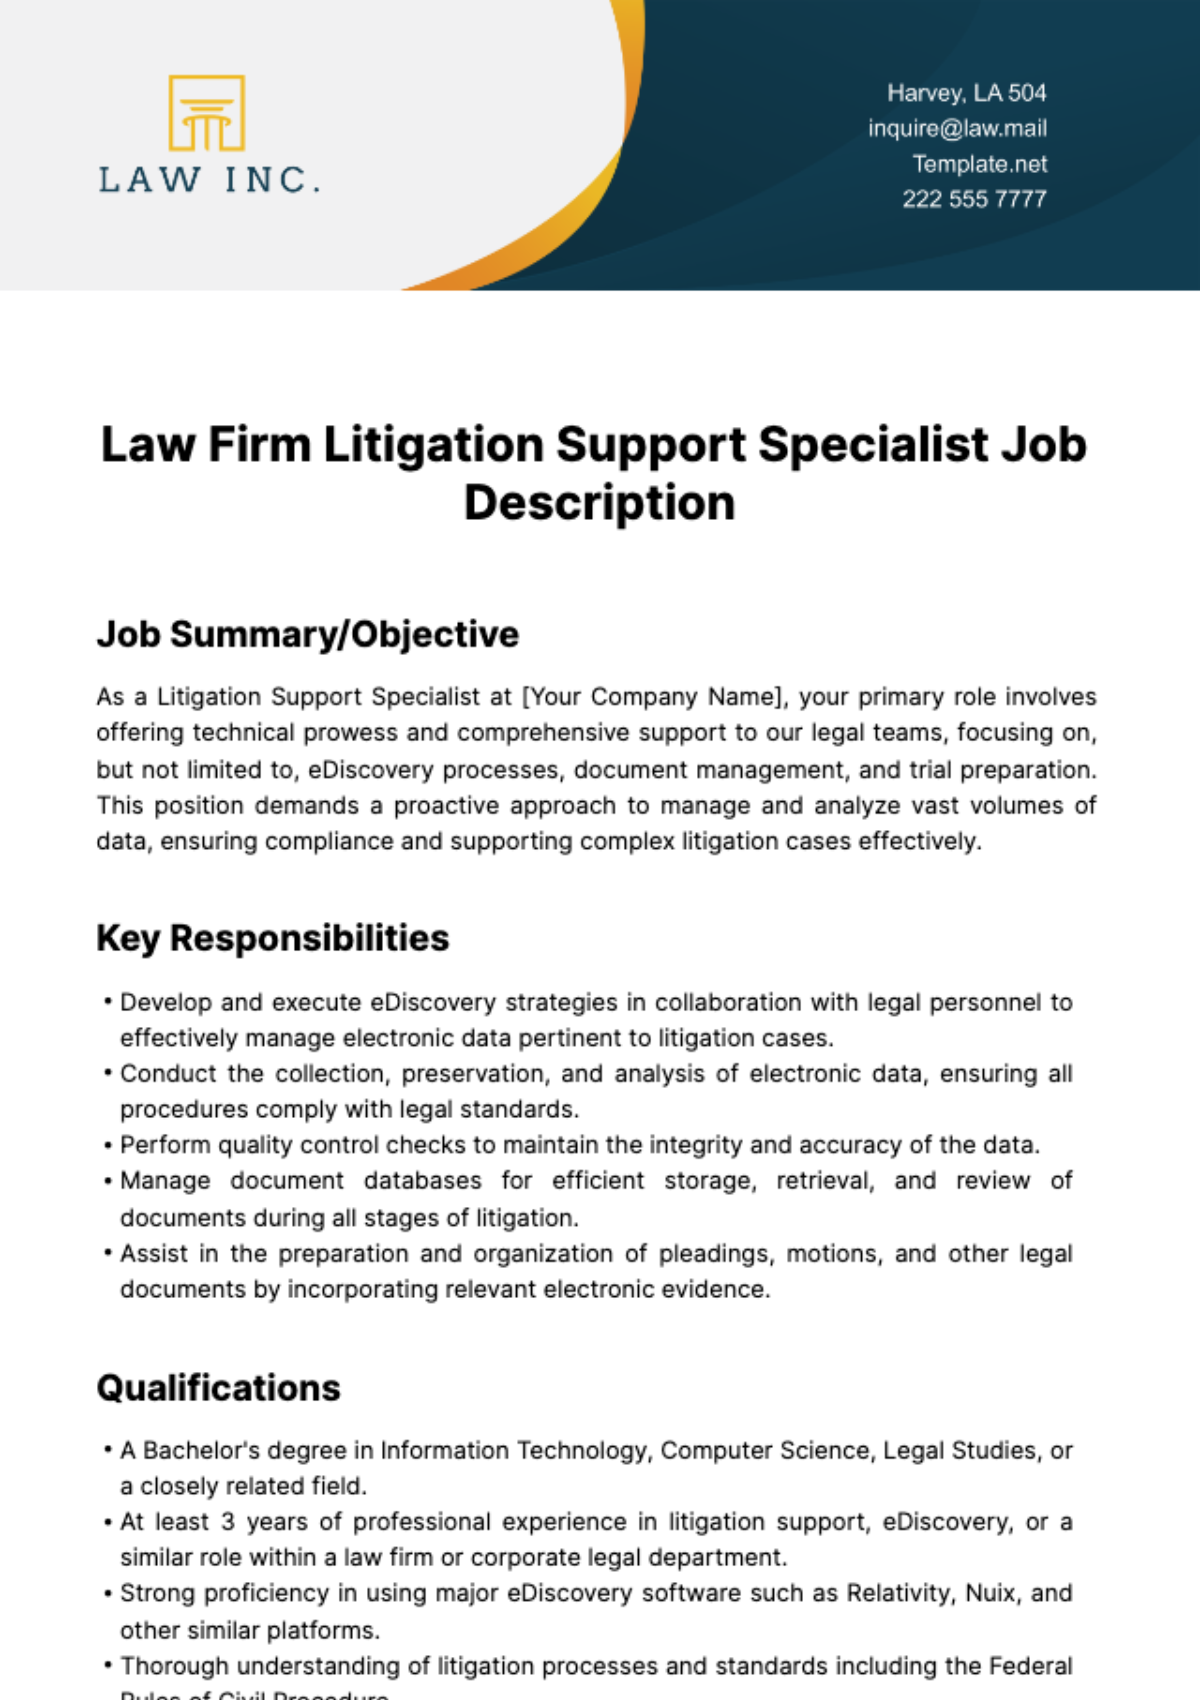 Free Law Firm Litigation Support Specialist Job Description Template